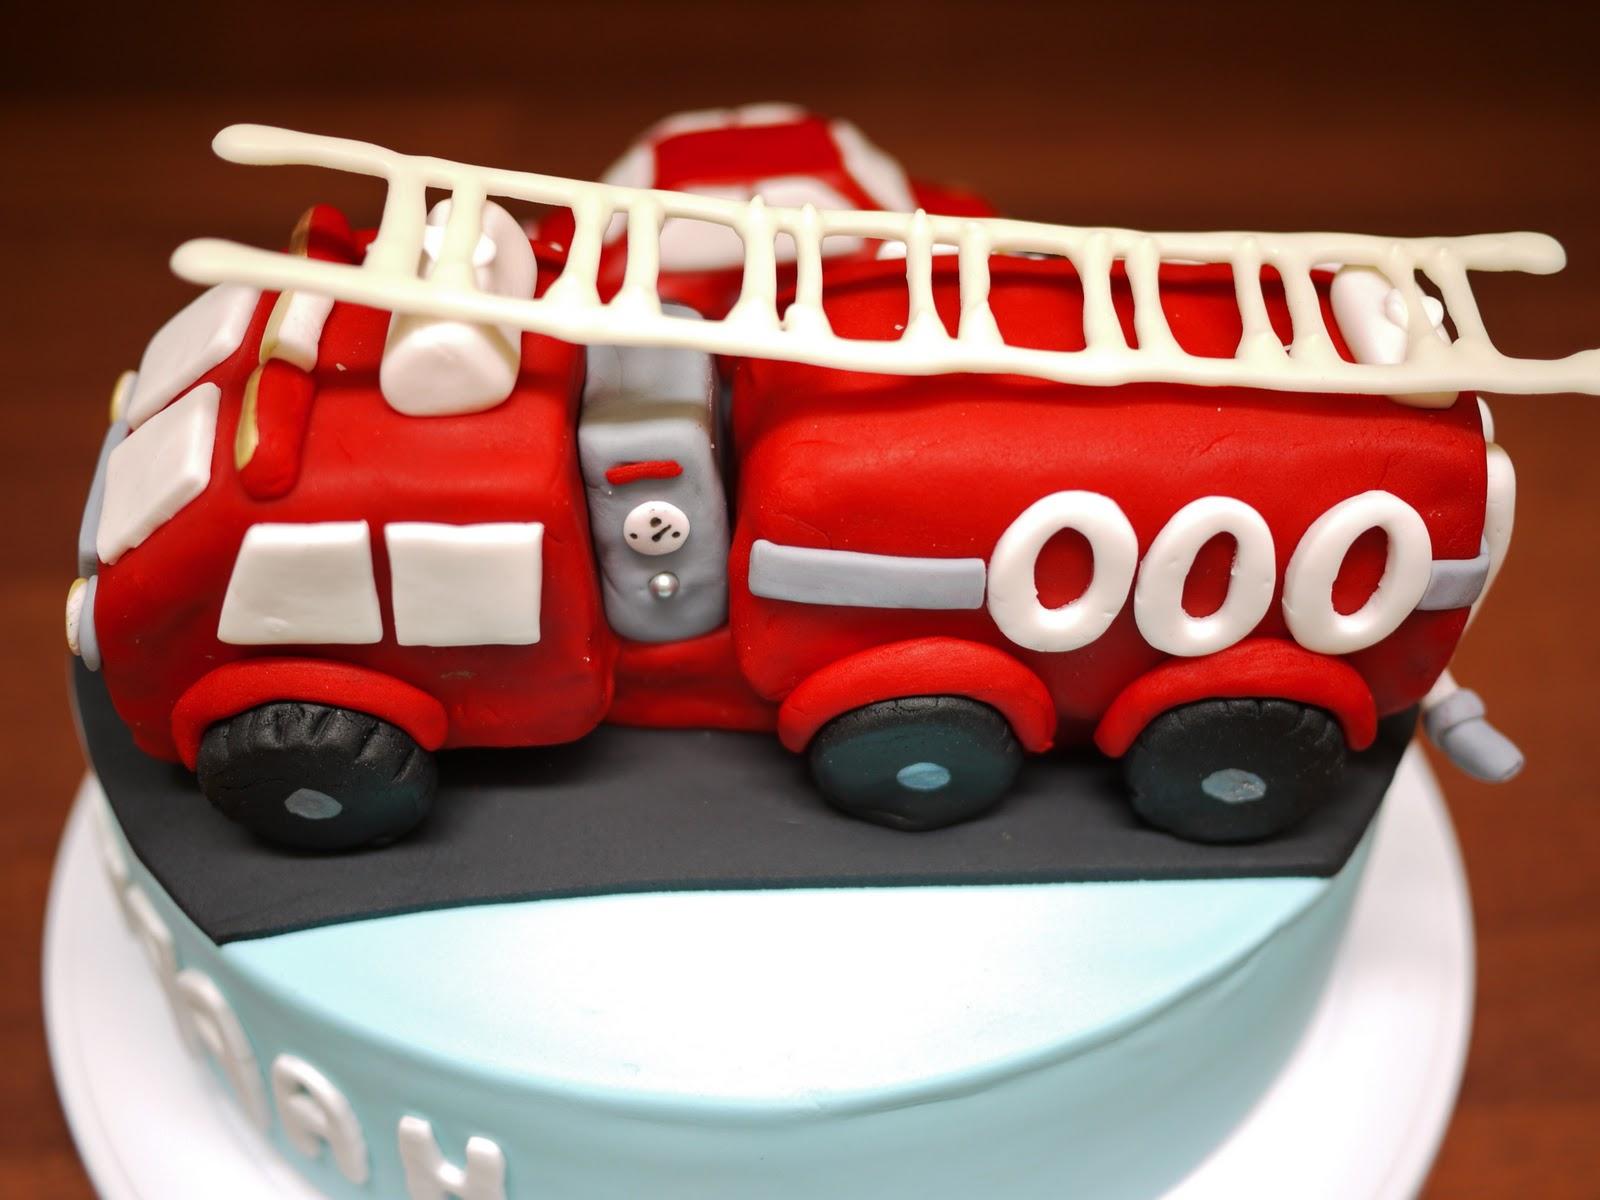 Cupcake tower & Fire trucks